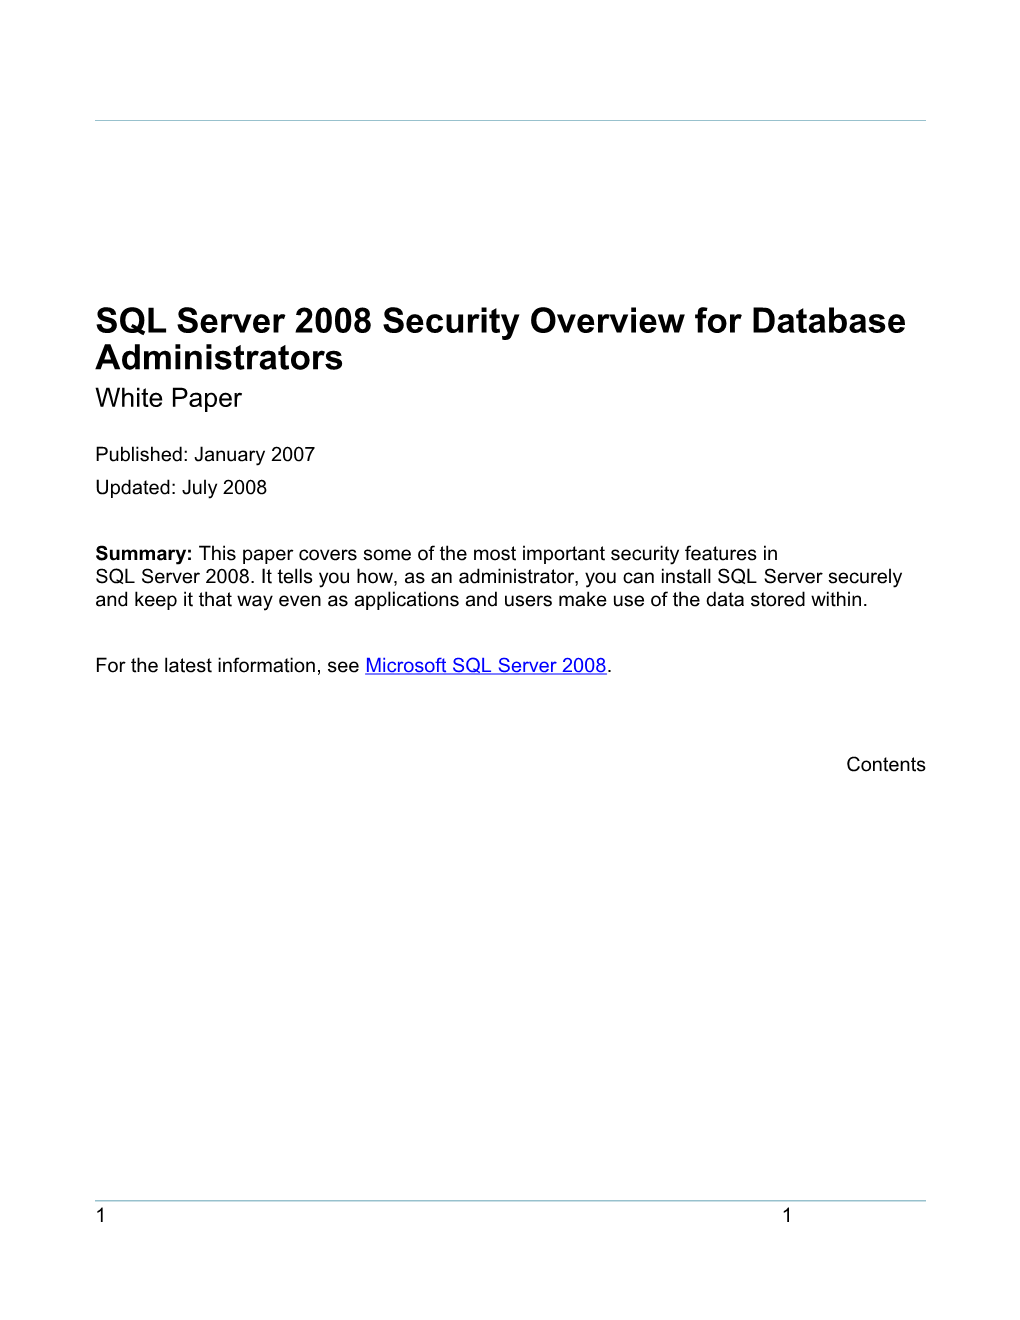 SQL Server 2008 Security Overview for Database Administrators